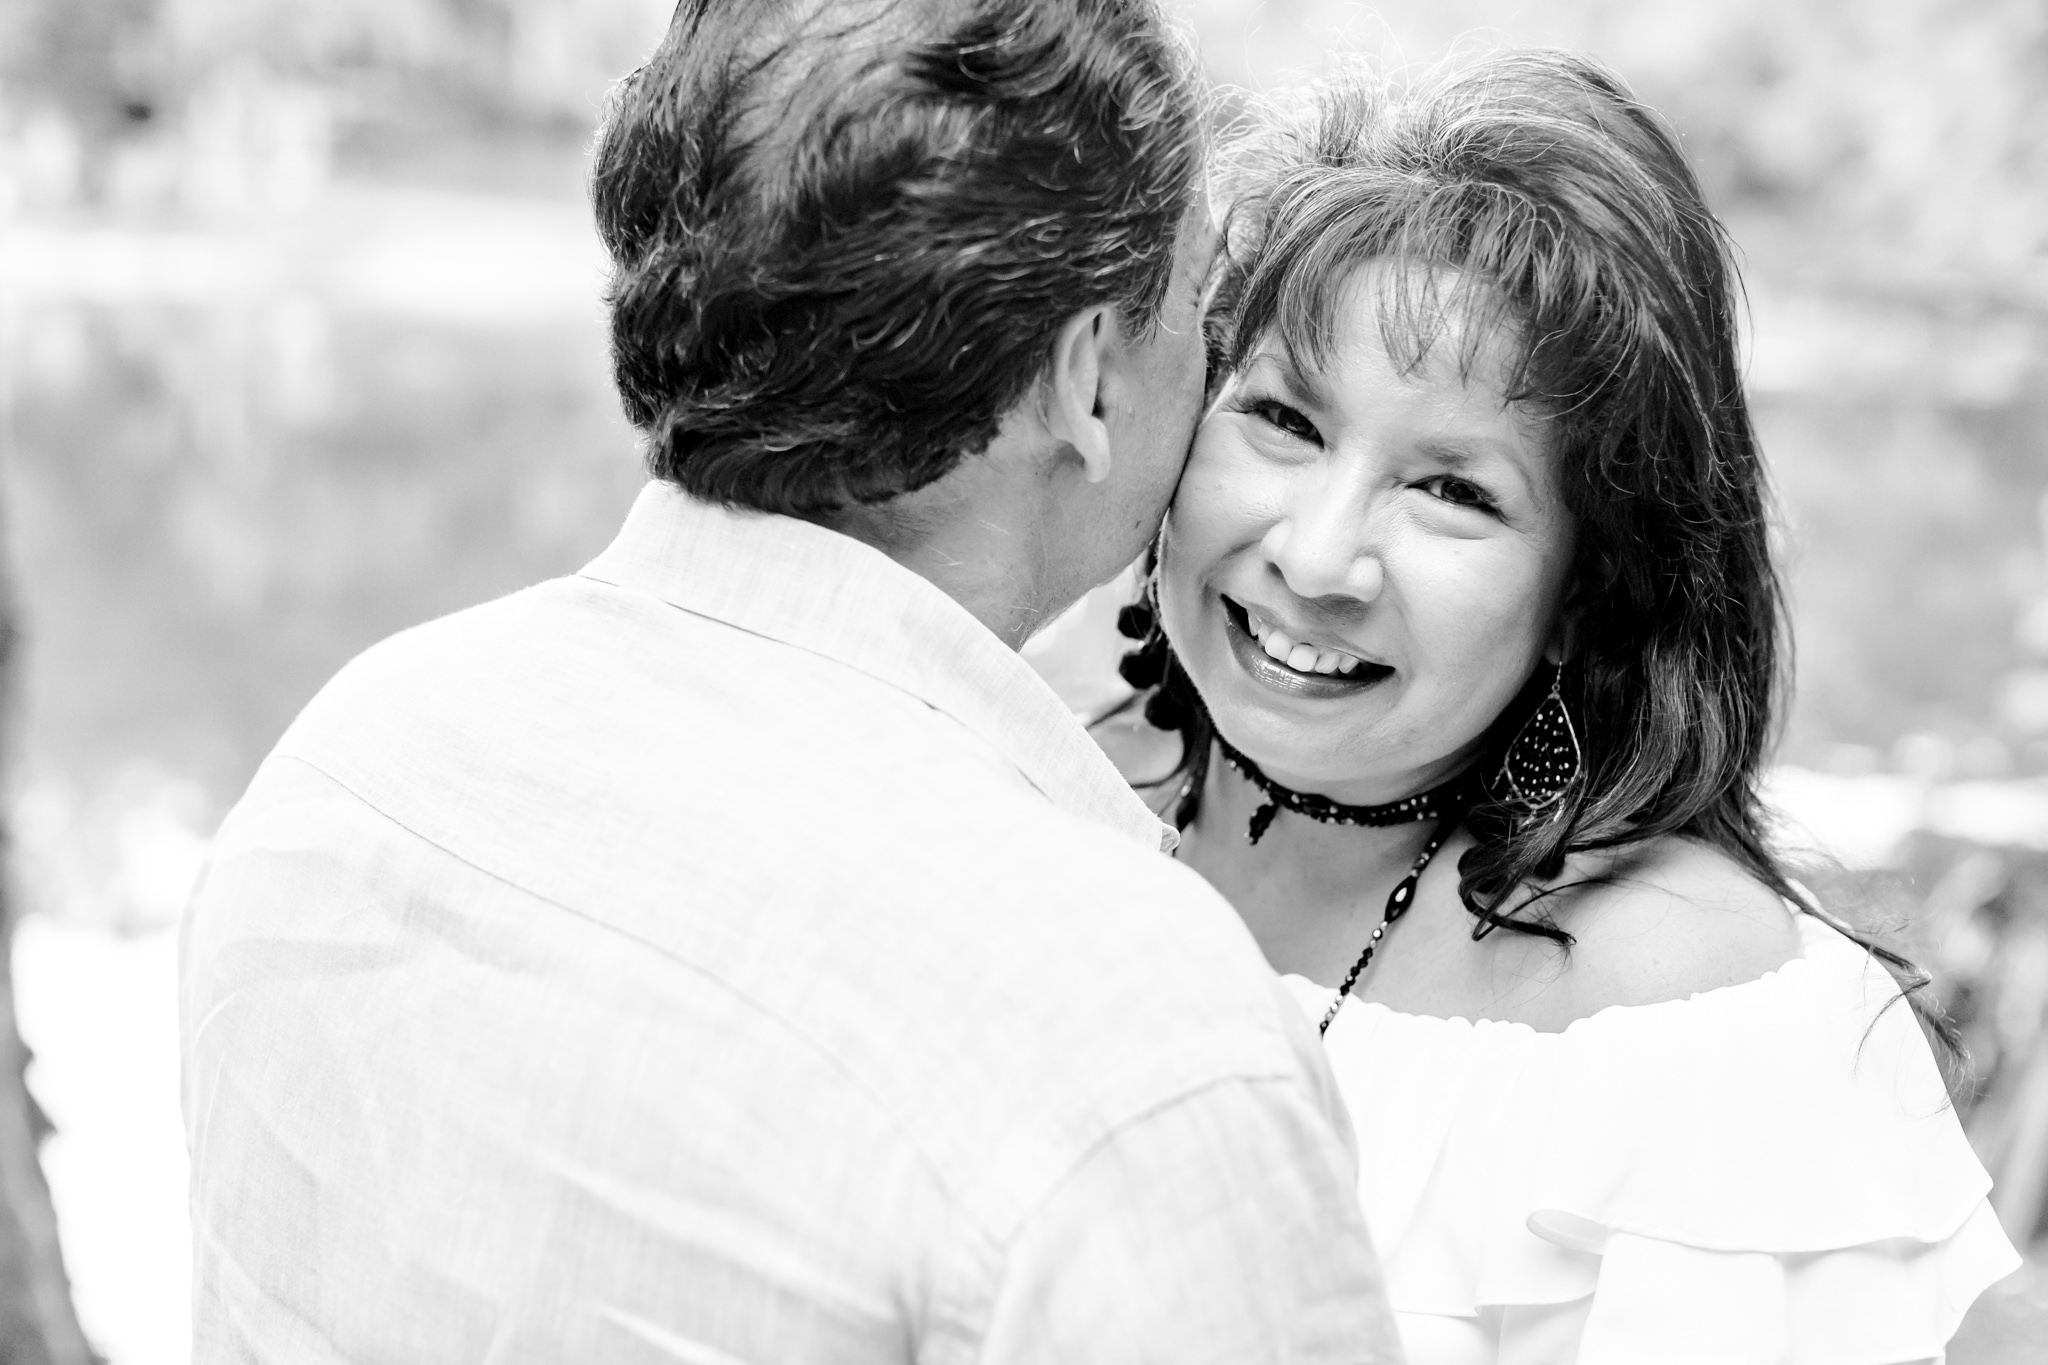 An Engagement Session at The Denman Estate Park in San Antonio, TX by Dawn Elizabeth Studios, San Antonio Wedding Photographer